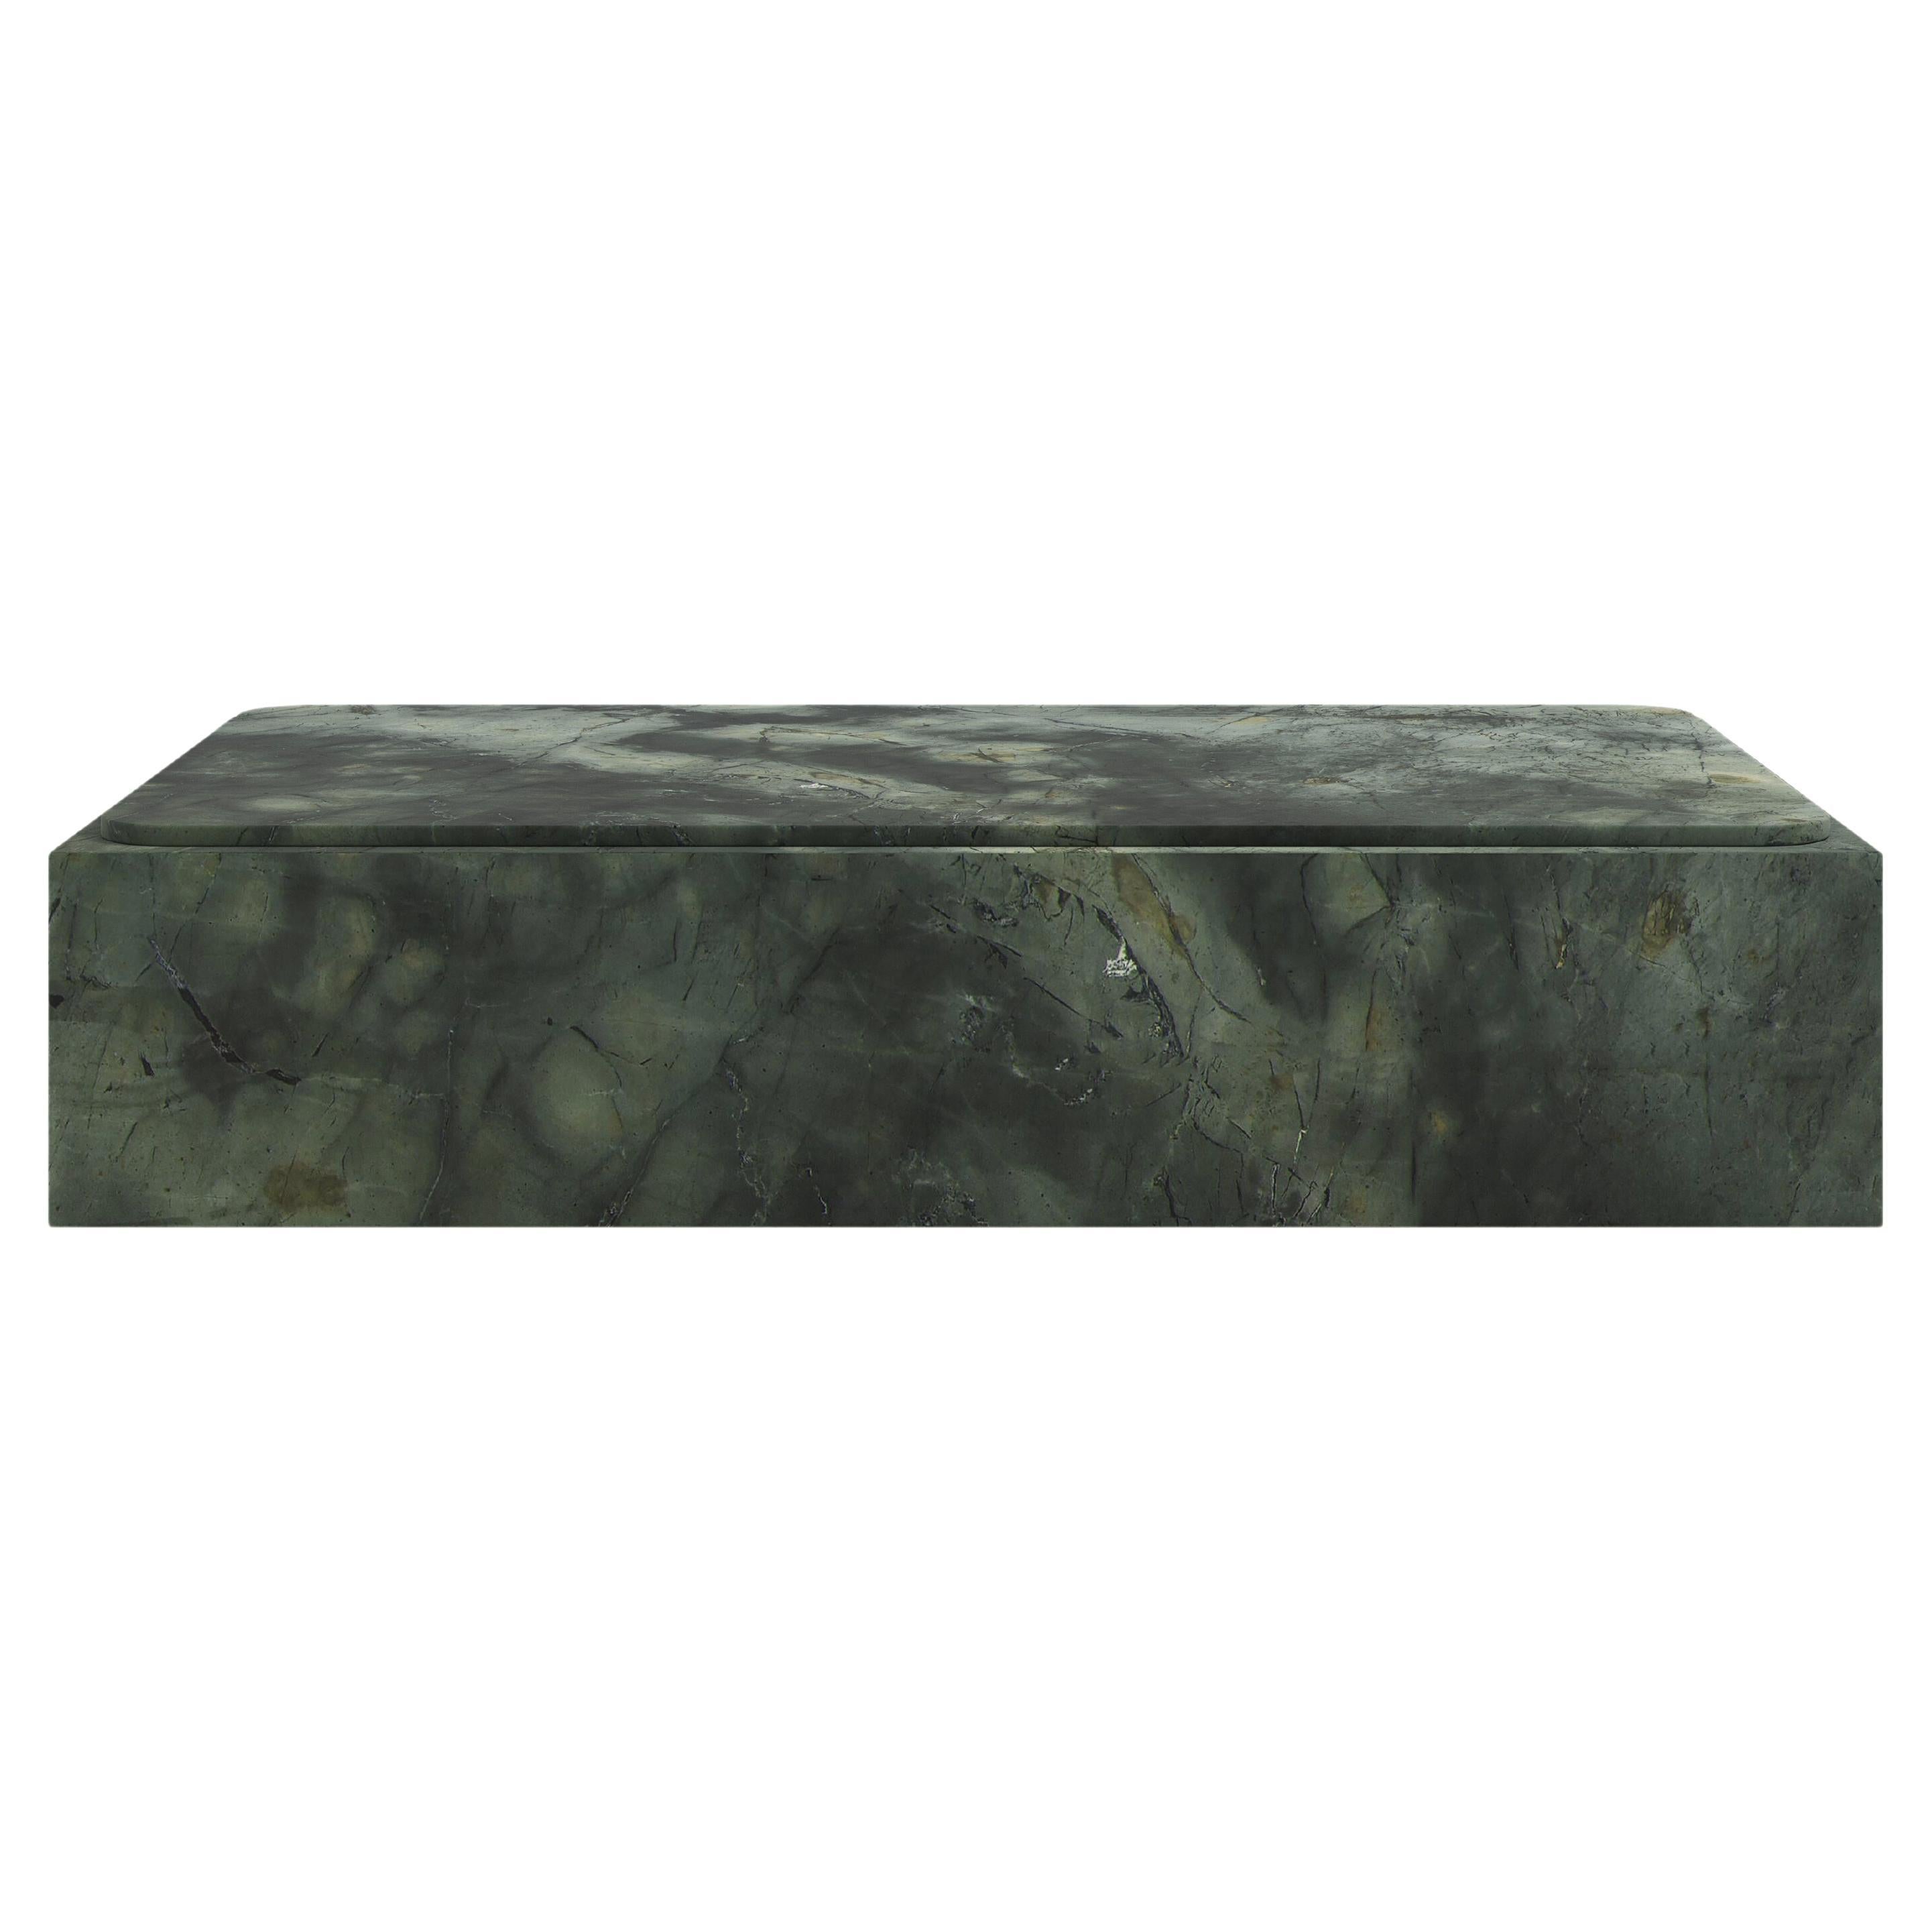 FORM(LA) Cubo Rectangle Plinth Coffee Table 48”L x 30”W x 13”H Edinburgh Marble  For Sale